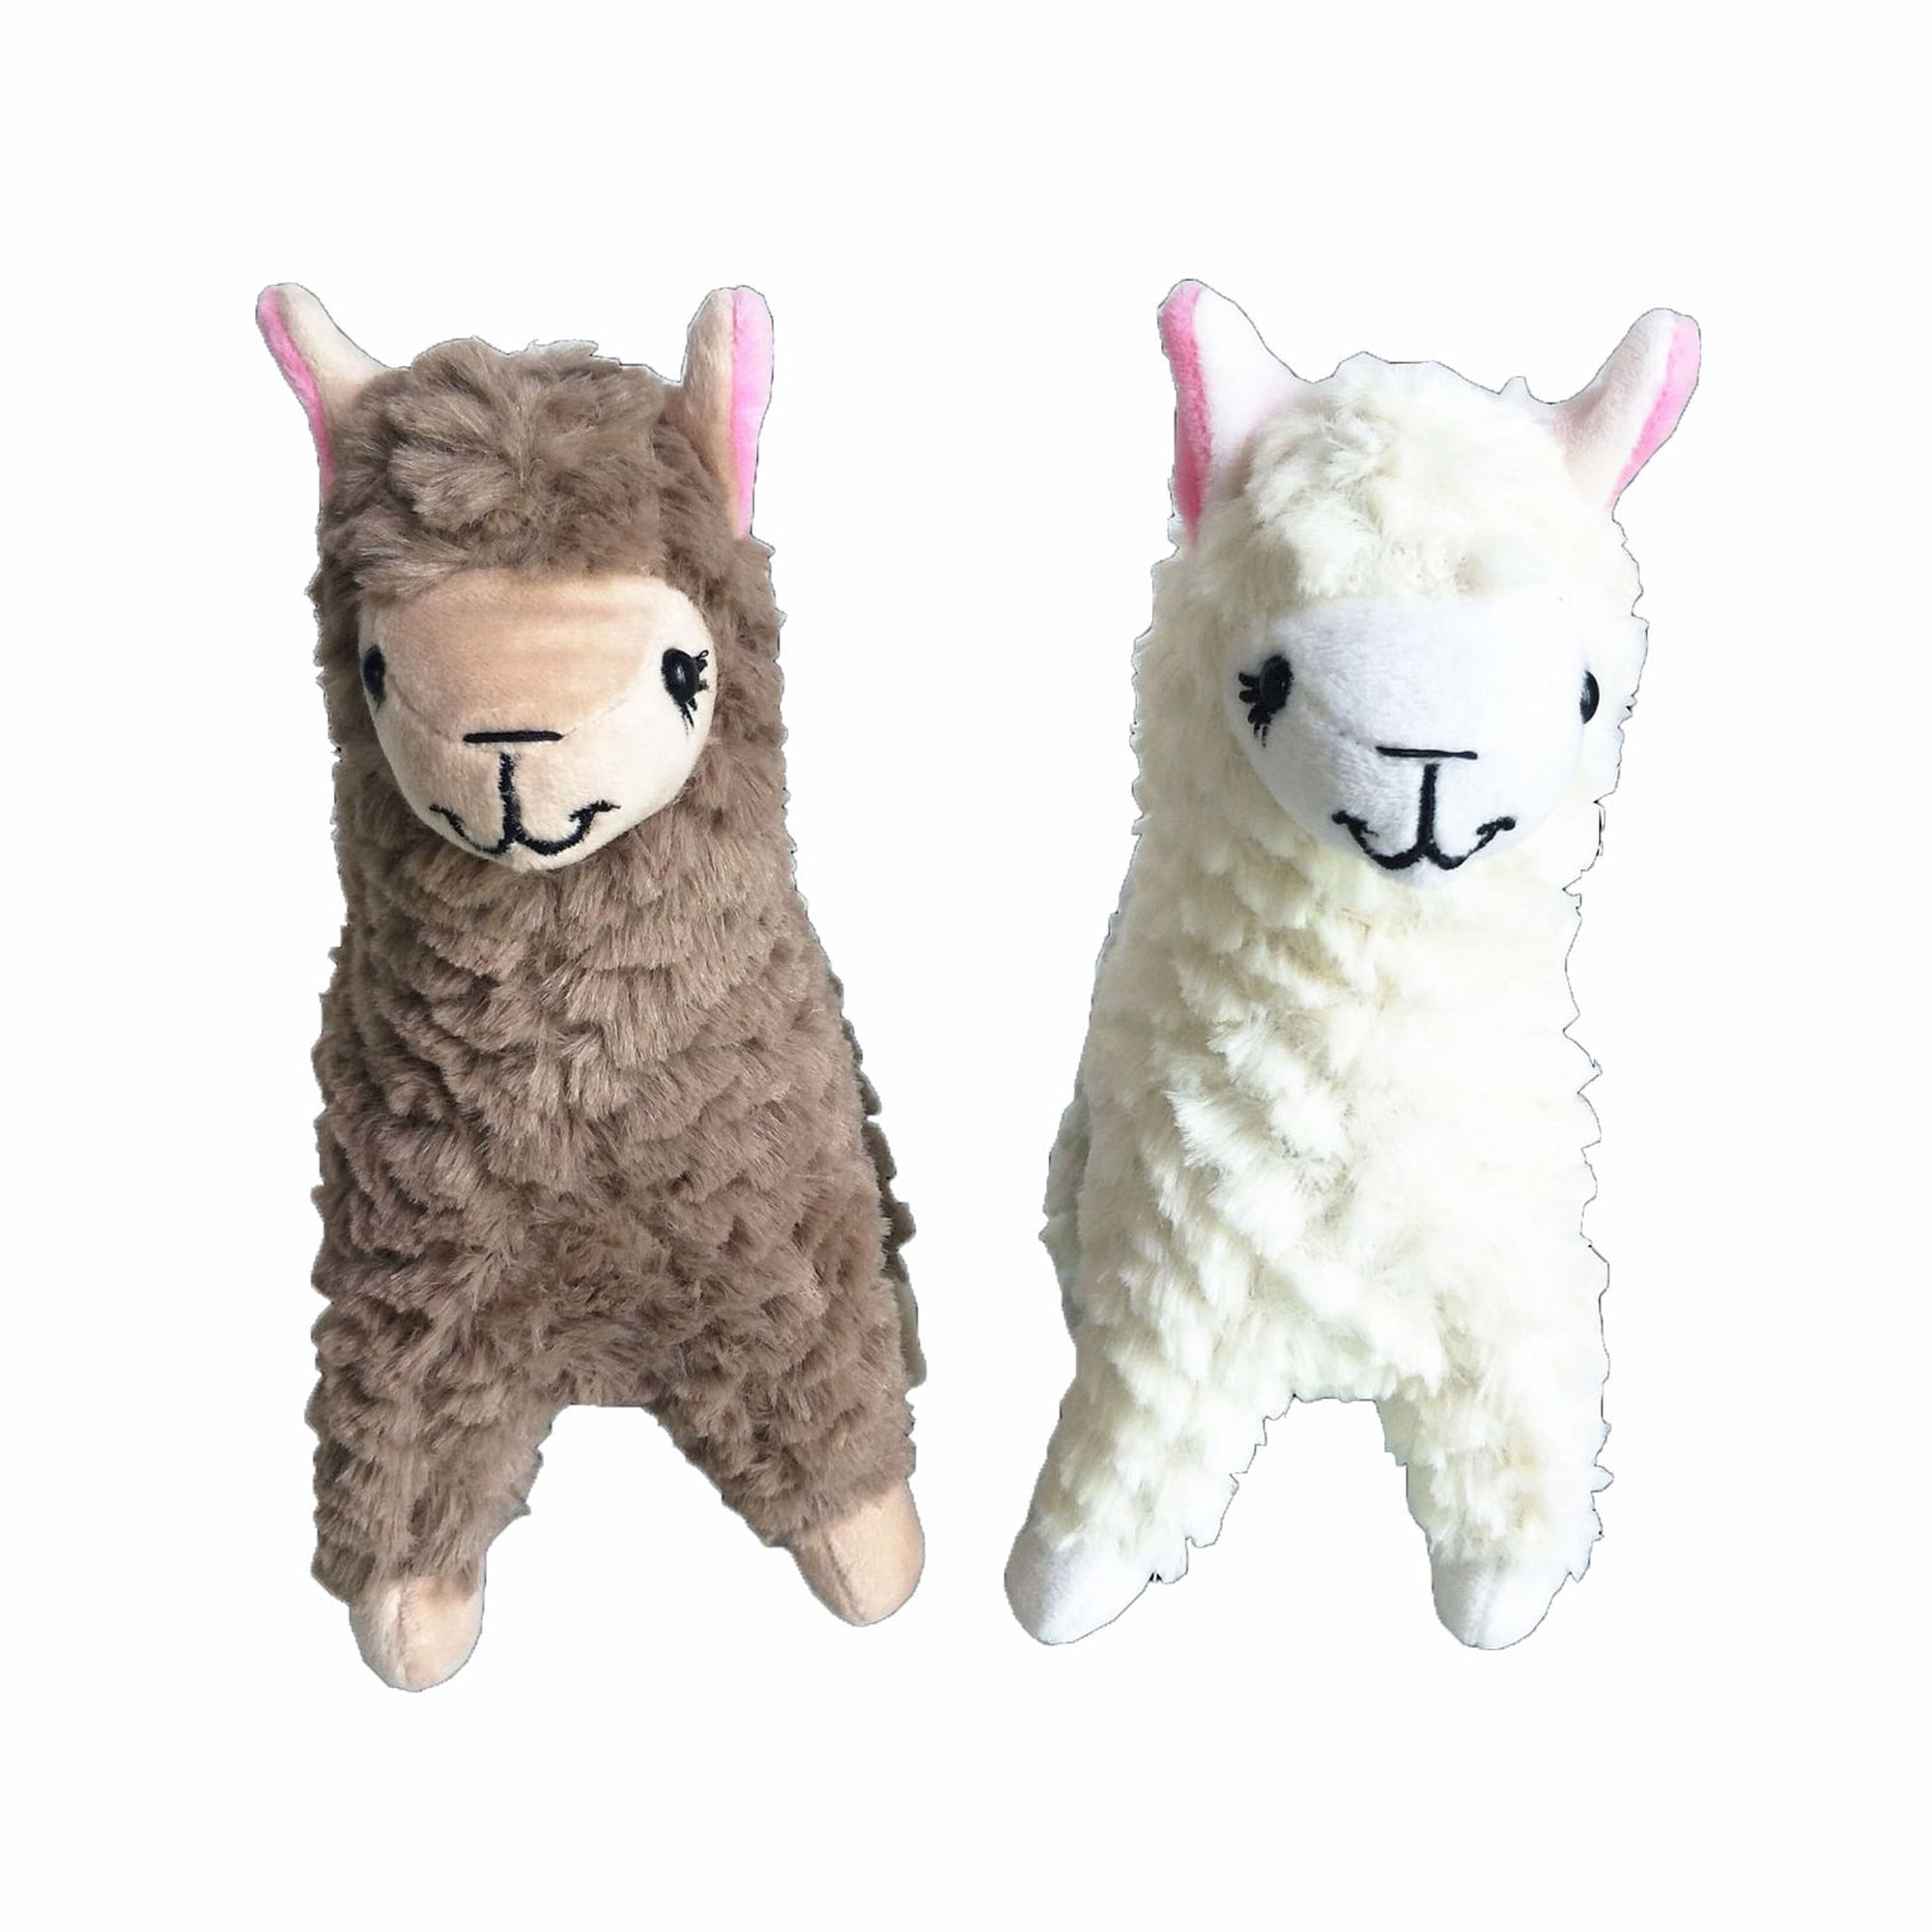 New Fuzzy Alpaca Plush Toy Kids Stuffed Animal Toy Llama Doll 9" Green & White 